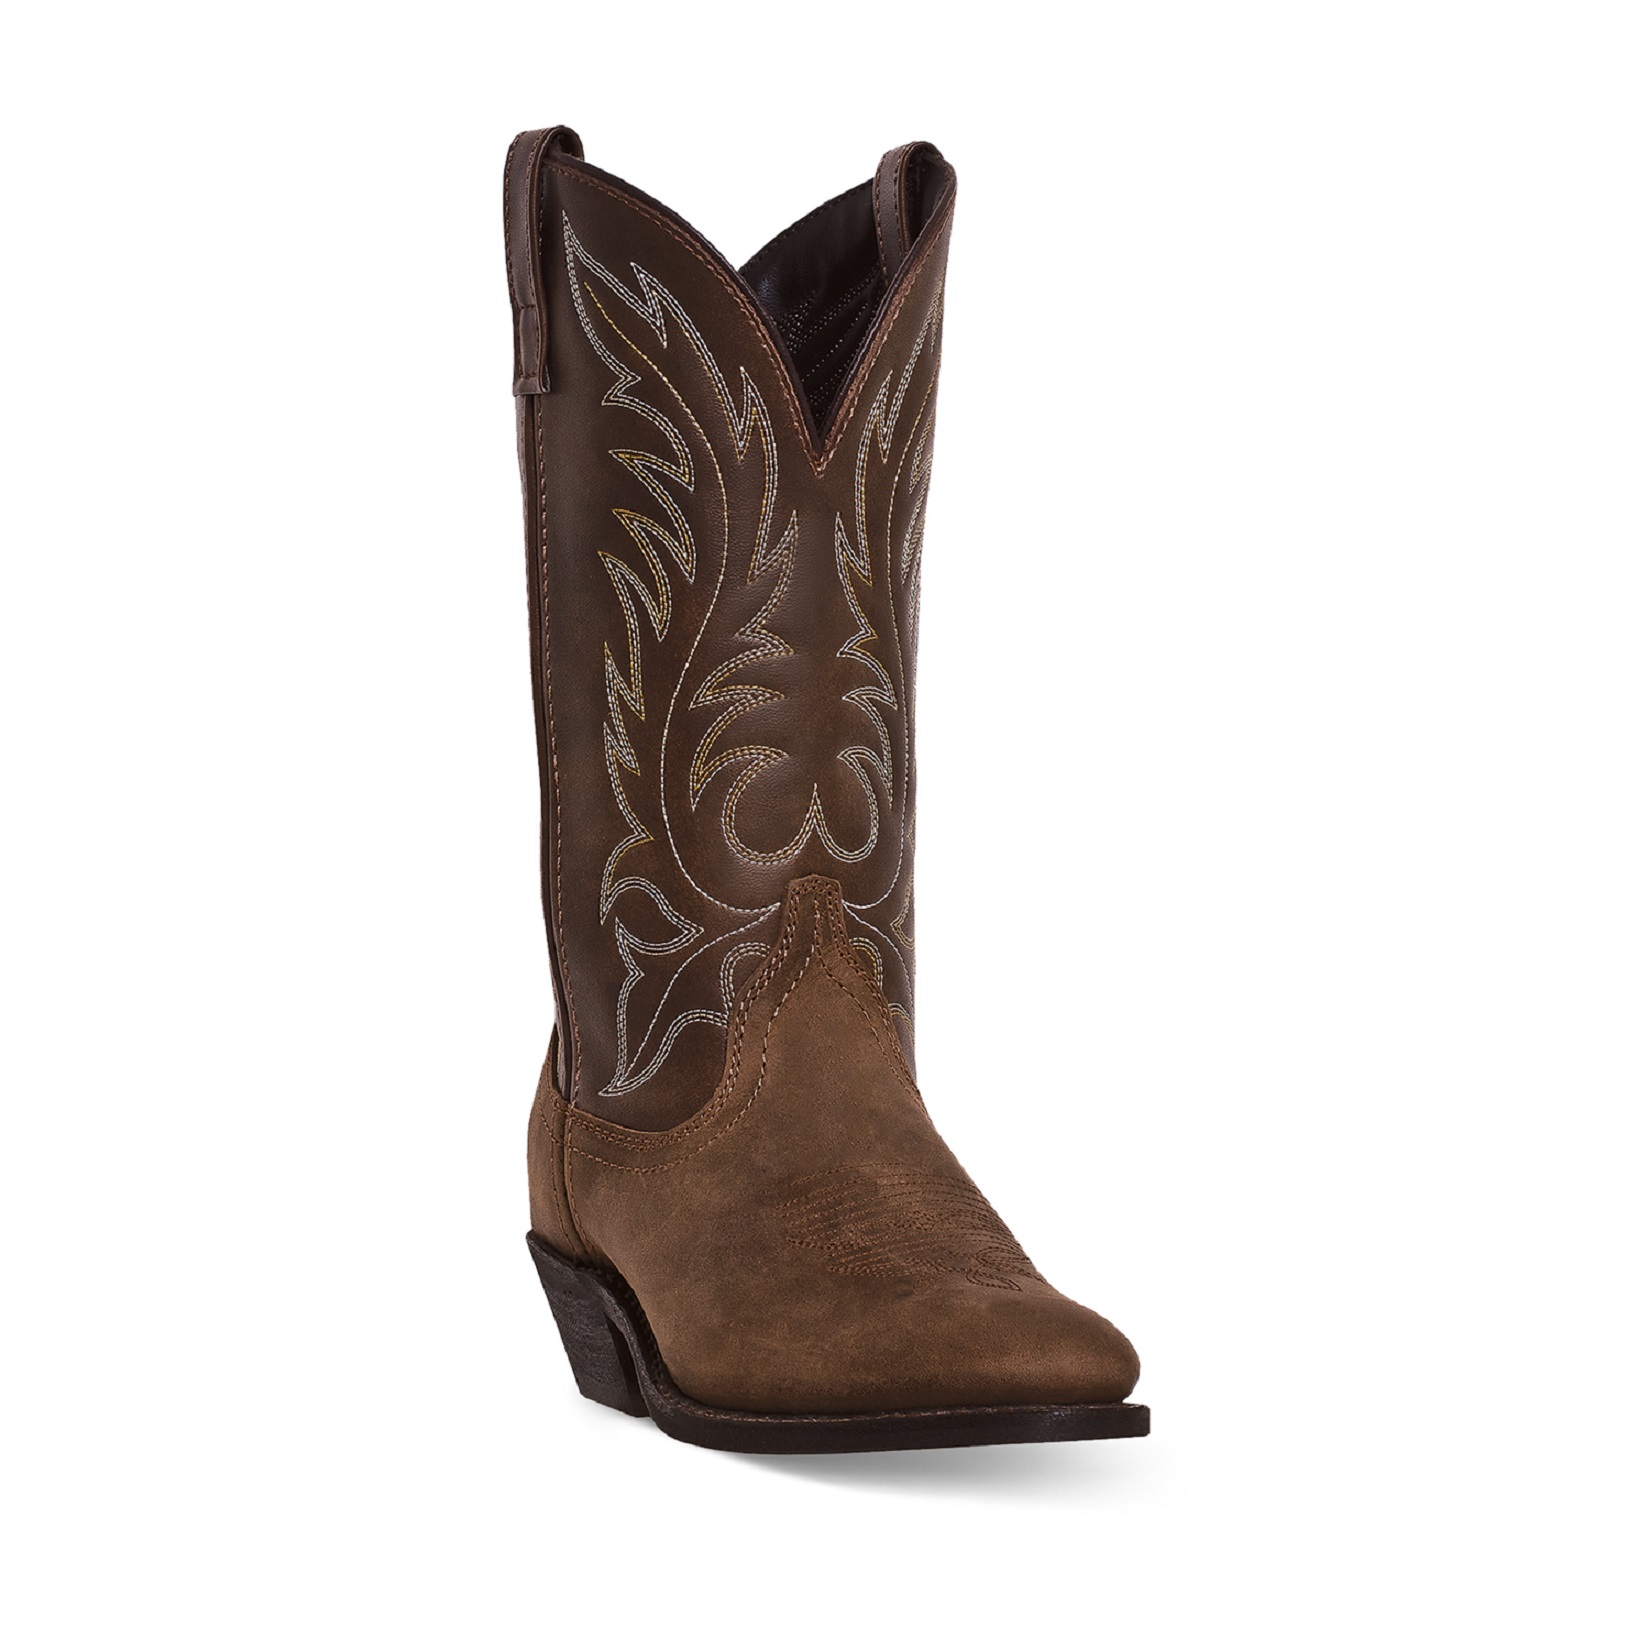 Laredo Women's Kadi 5742 Brown Cowboy Soft Toe Boot - Wide Widths Available